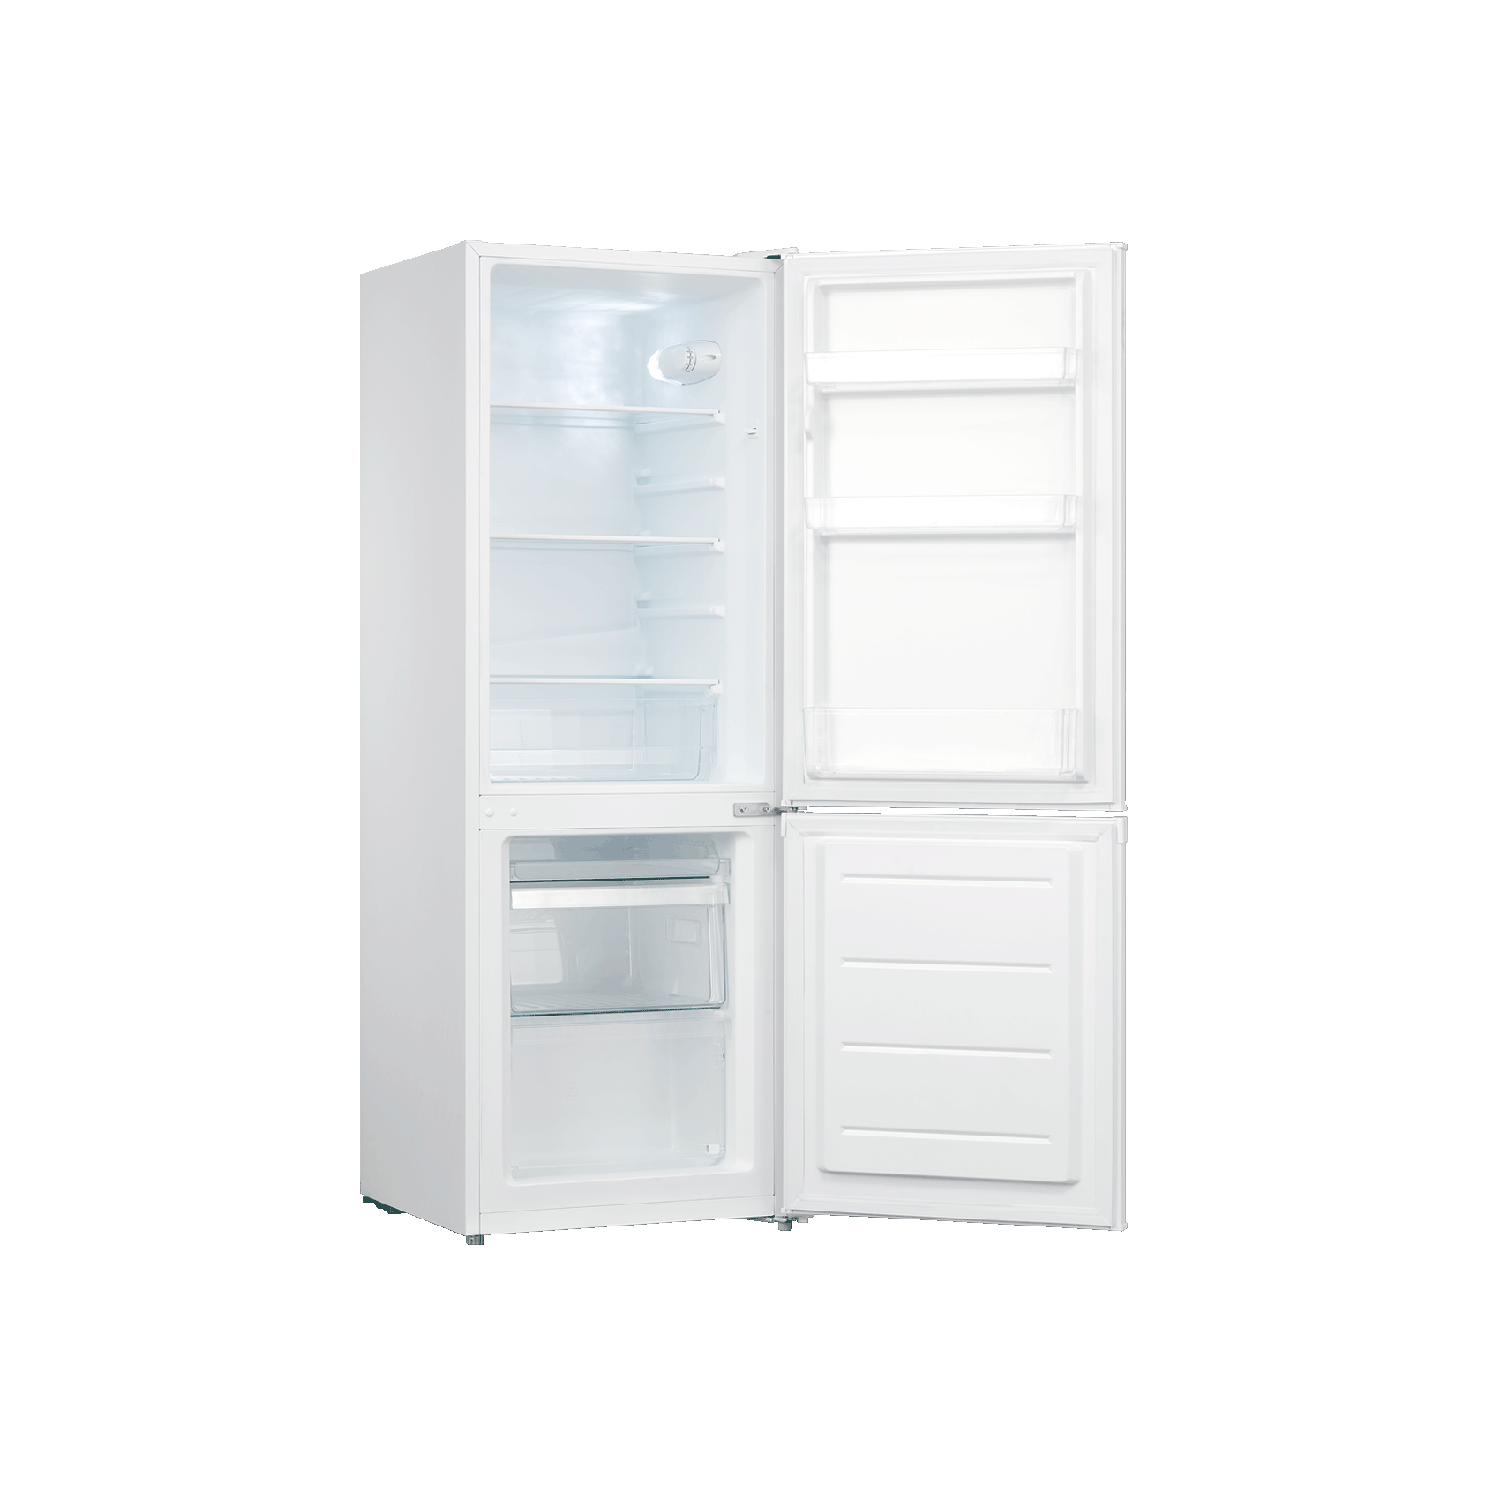 Comfee' Bottom Mounted Refrigerator – Global